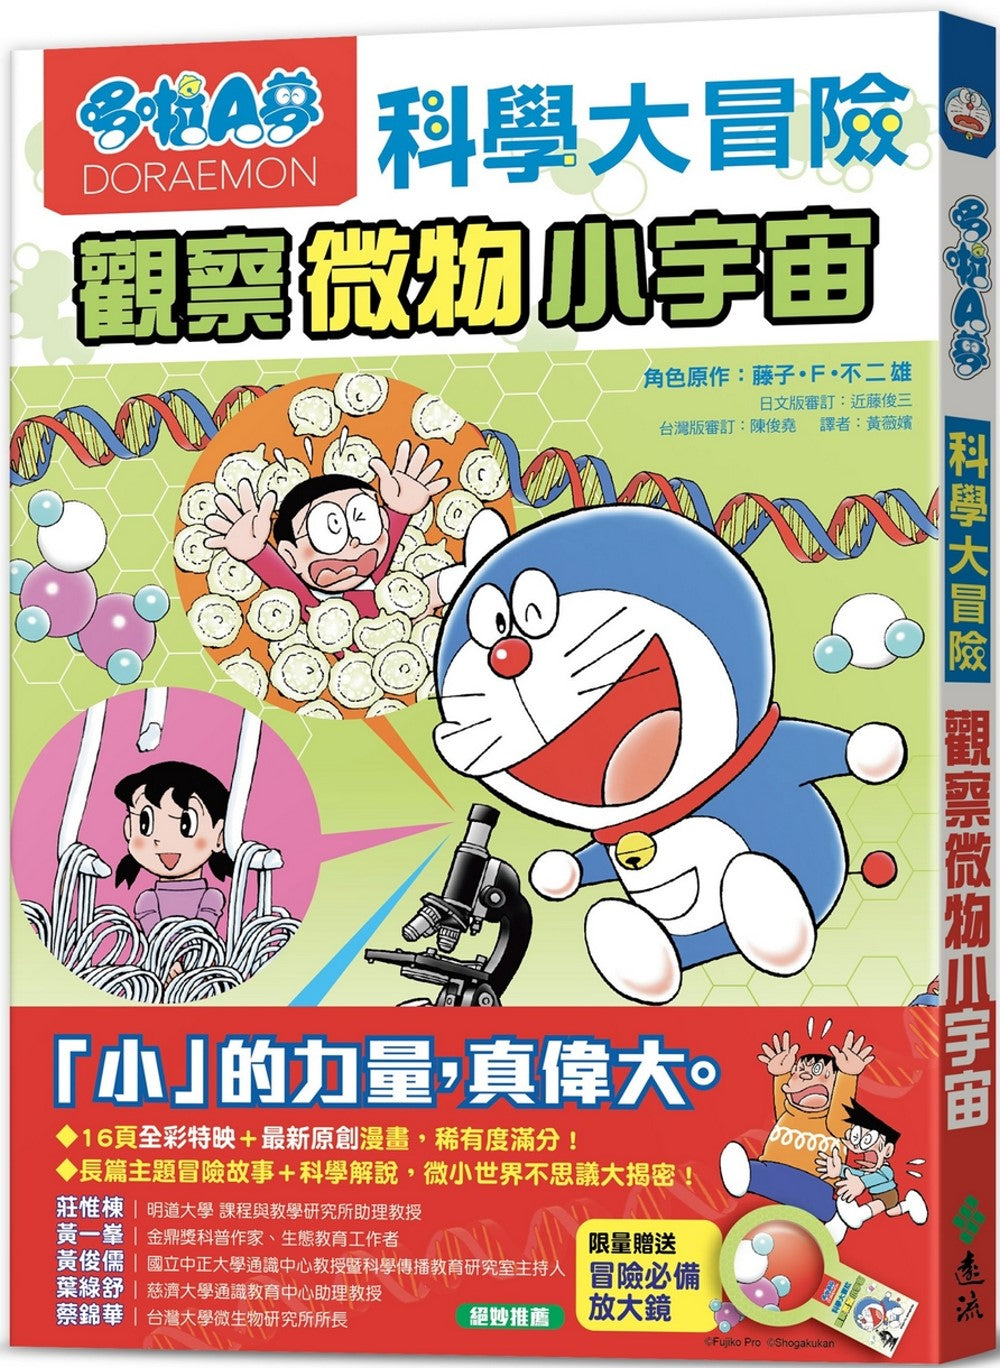 Doraemon Science Adventure #3: Microscopic Science! • 哆啦A夢科學大冒險3：觀察微物小宇宙